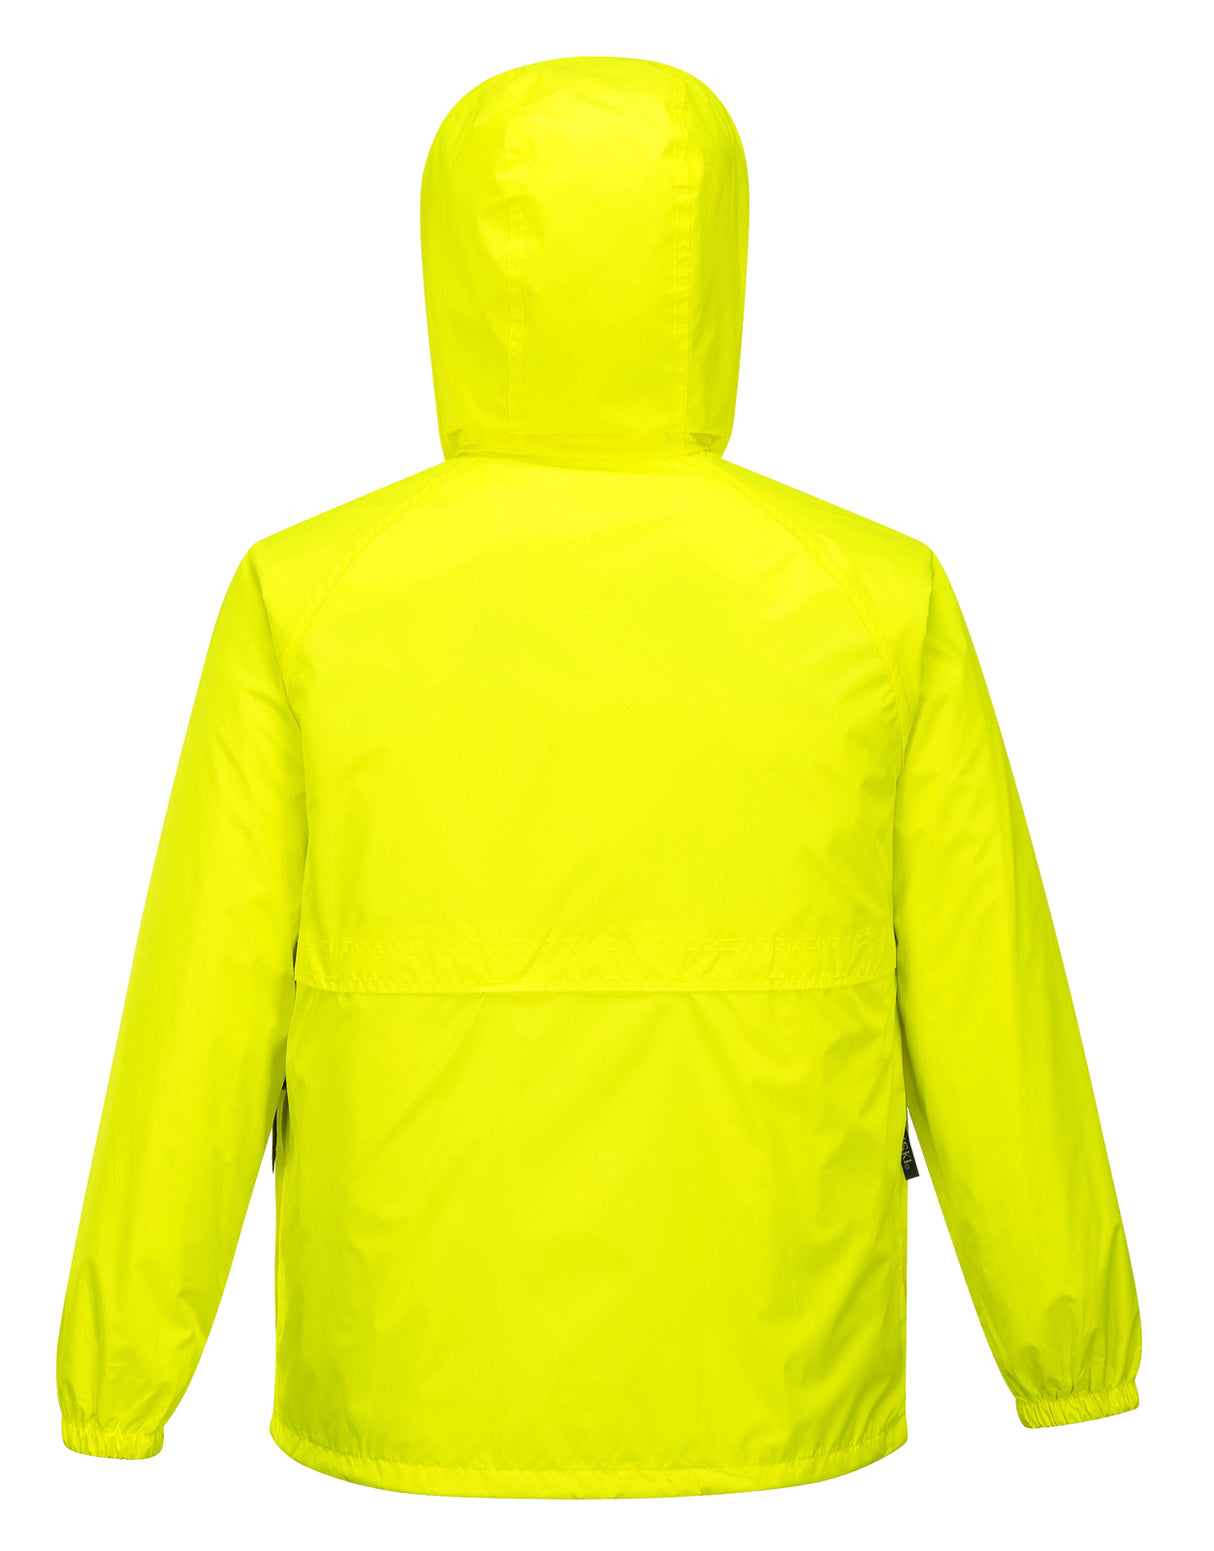 HUSKI STRATUS RAIN JACKET Waterproof Workwear Concealed Hood Windproof Packable - Yellow Fluro - 3XL